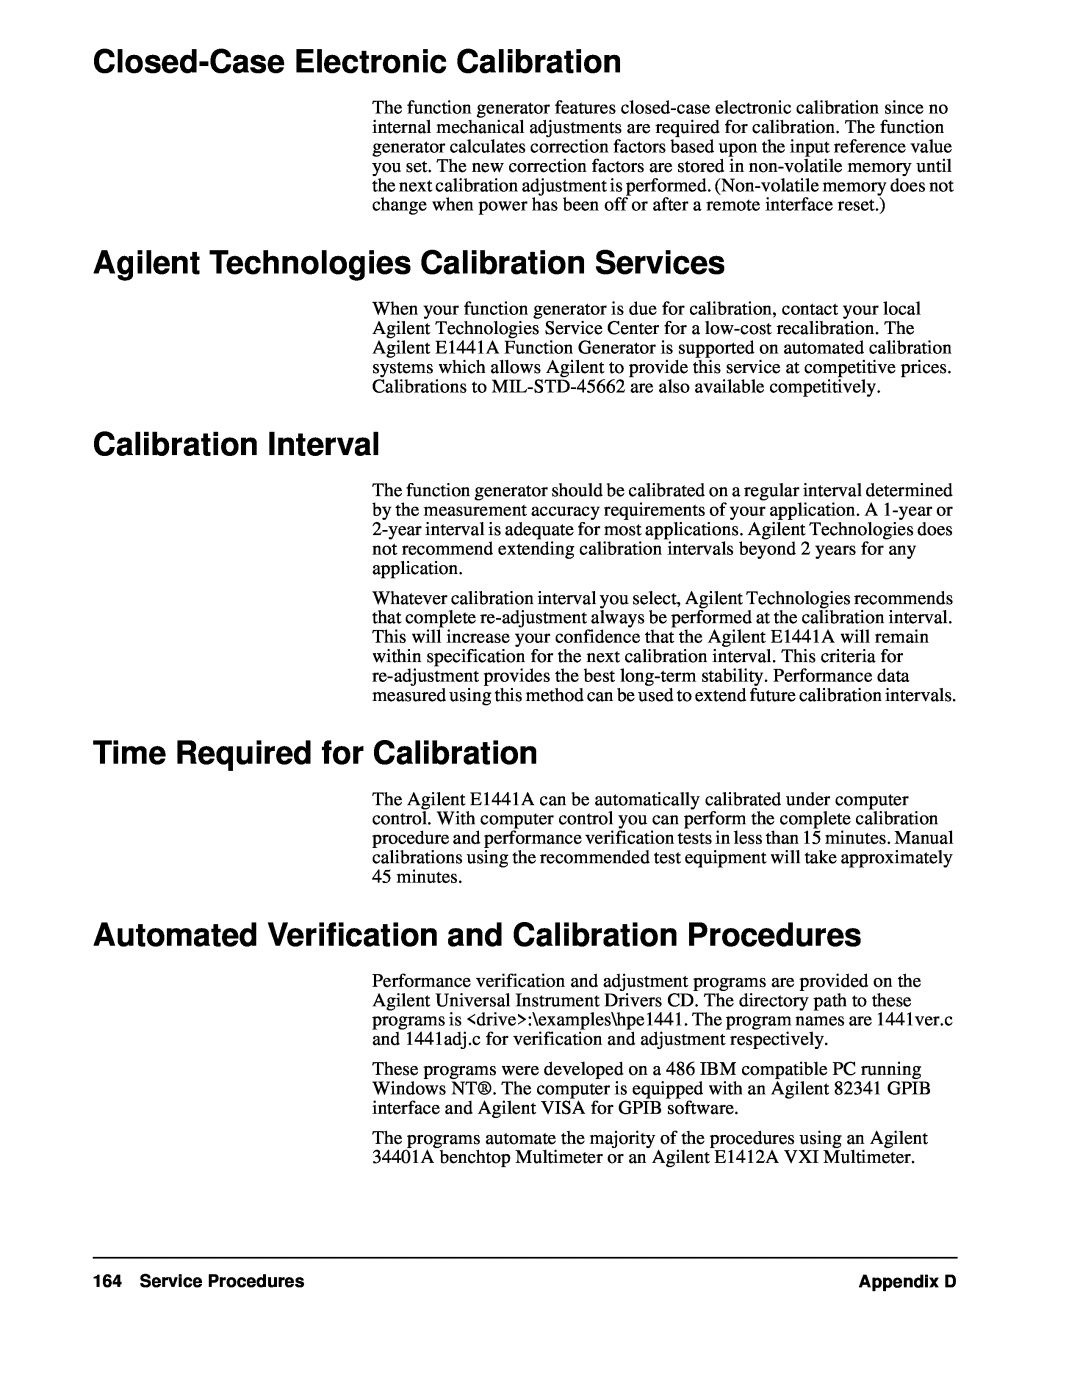 Agilent Technologies E1441A user service Closed-CaseElectronic Calibration, Agilent Technologies Calibration Services 